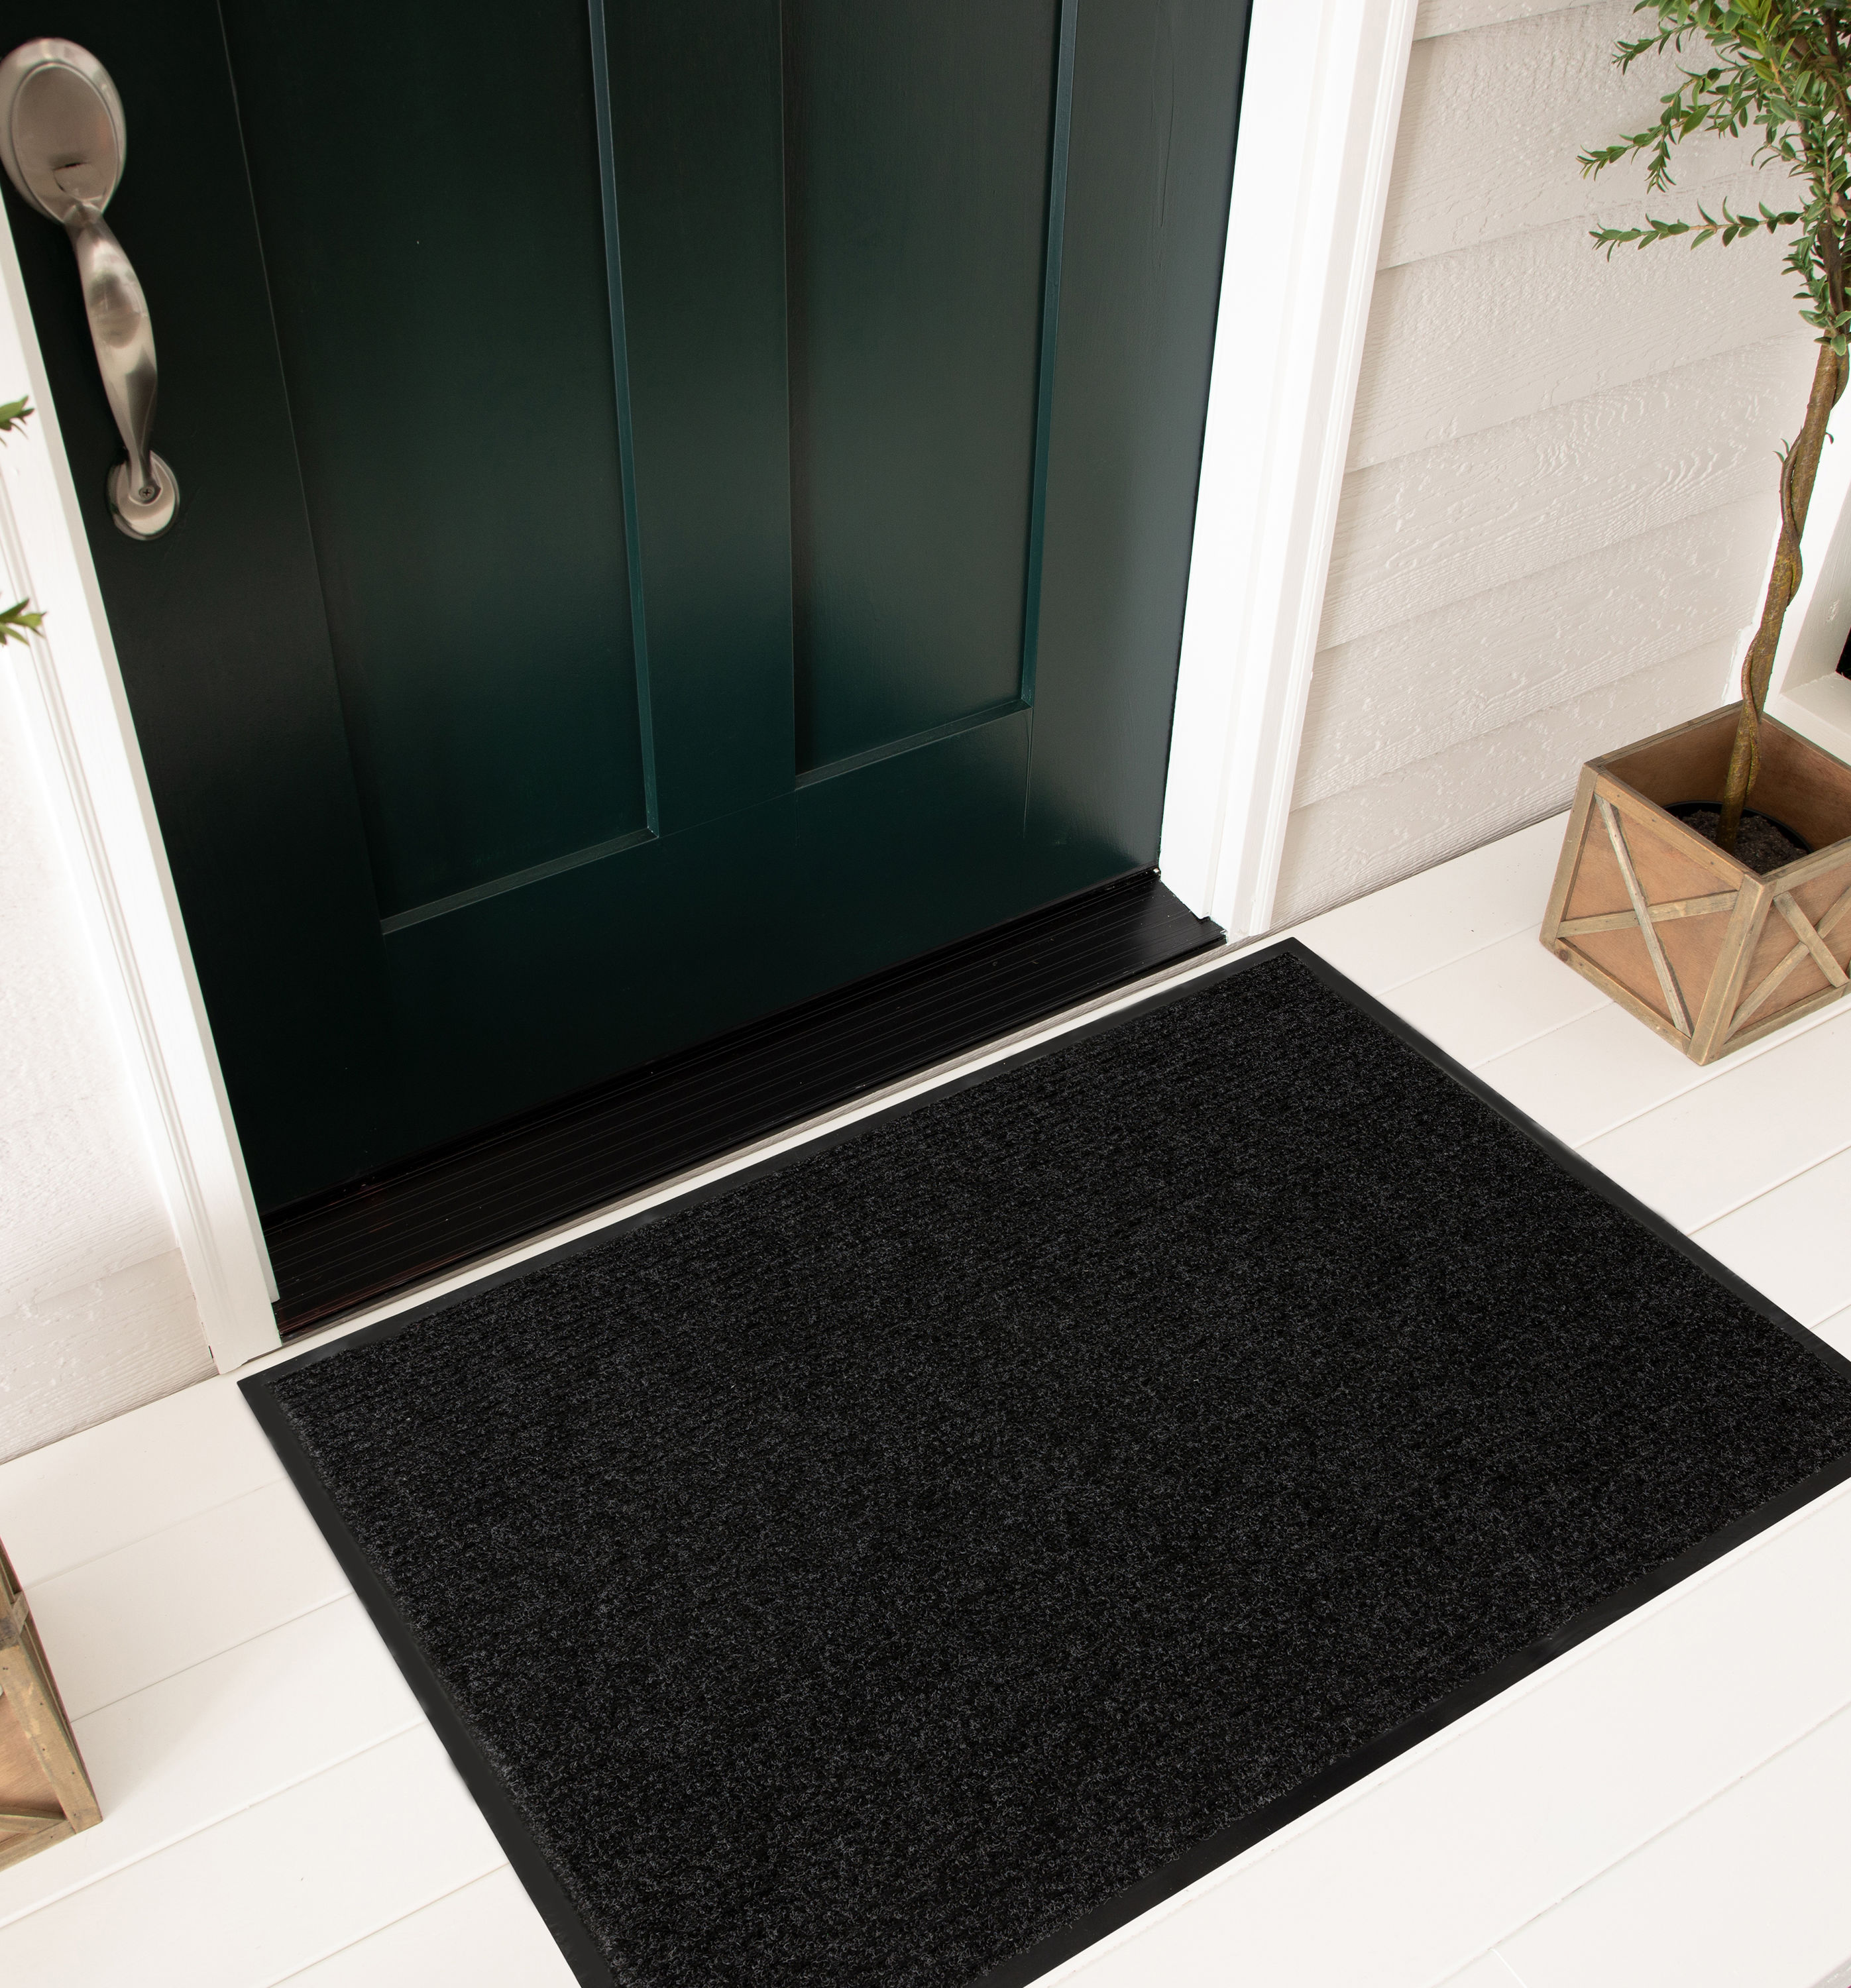 3'x5' Gateway Utility Doormat Charcoal - Mohawk : Target